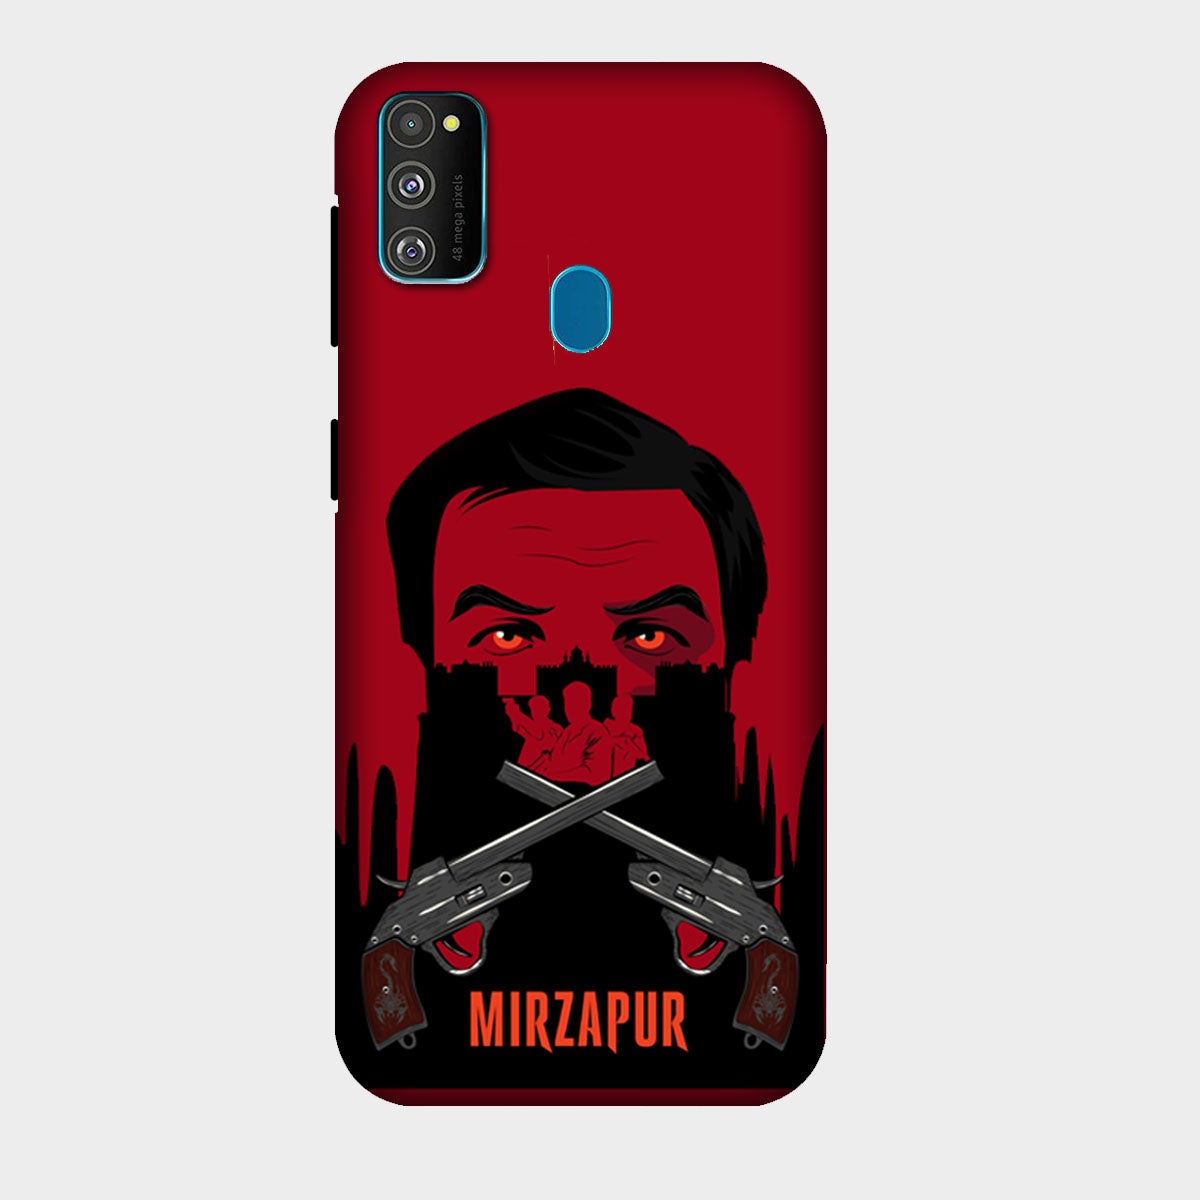 Mirzapur - Mobile Phone Cover - Hard Case - Samsung - Samsung